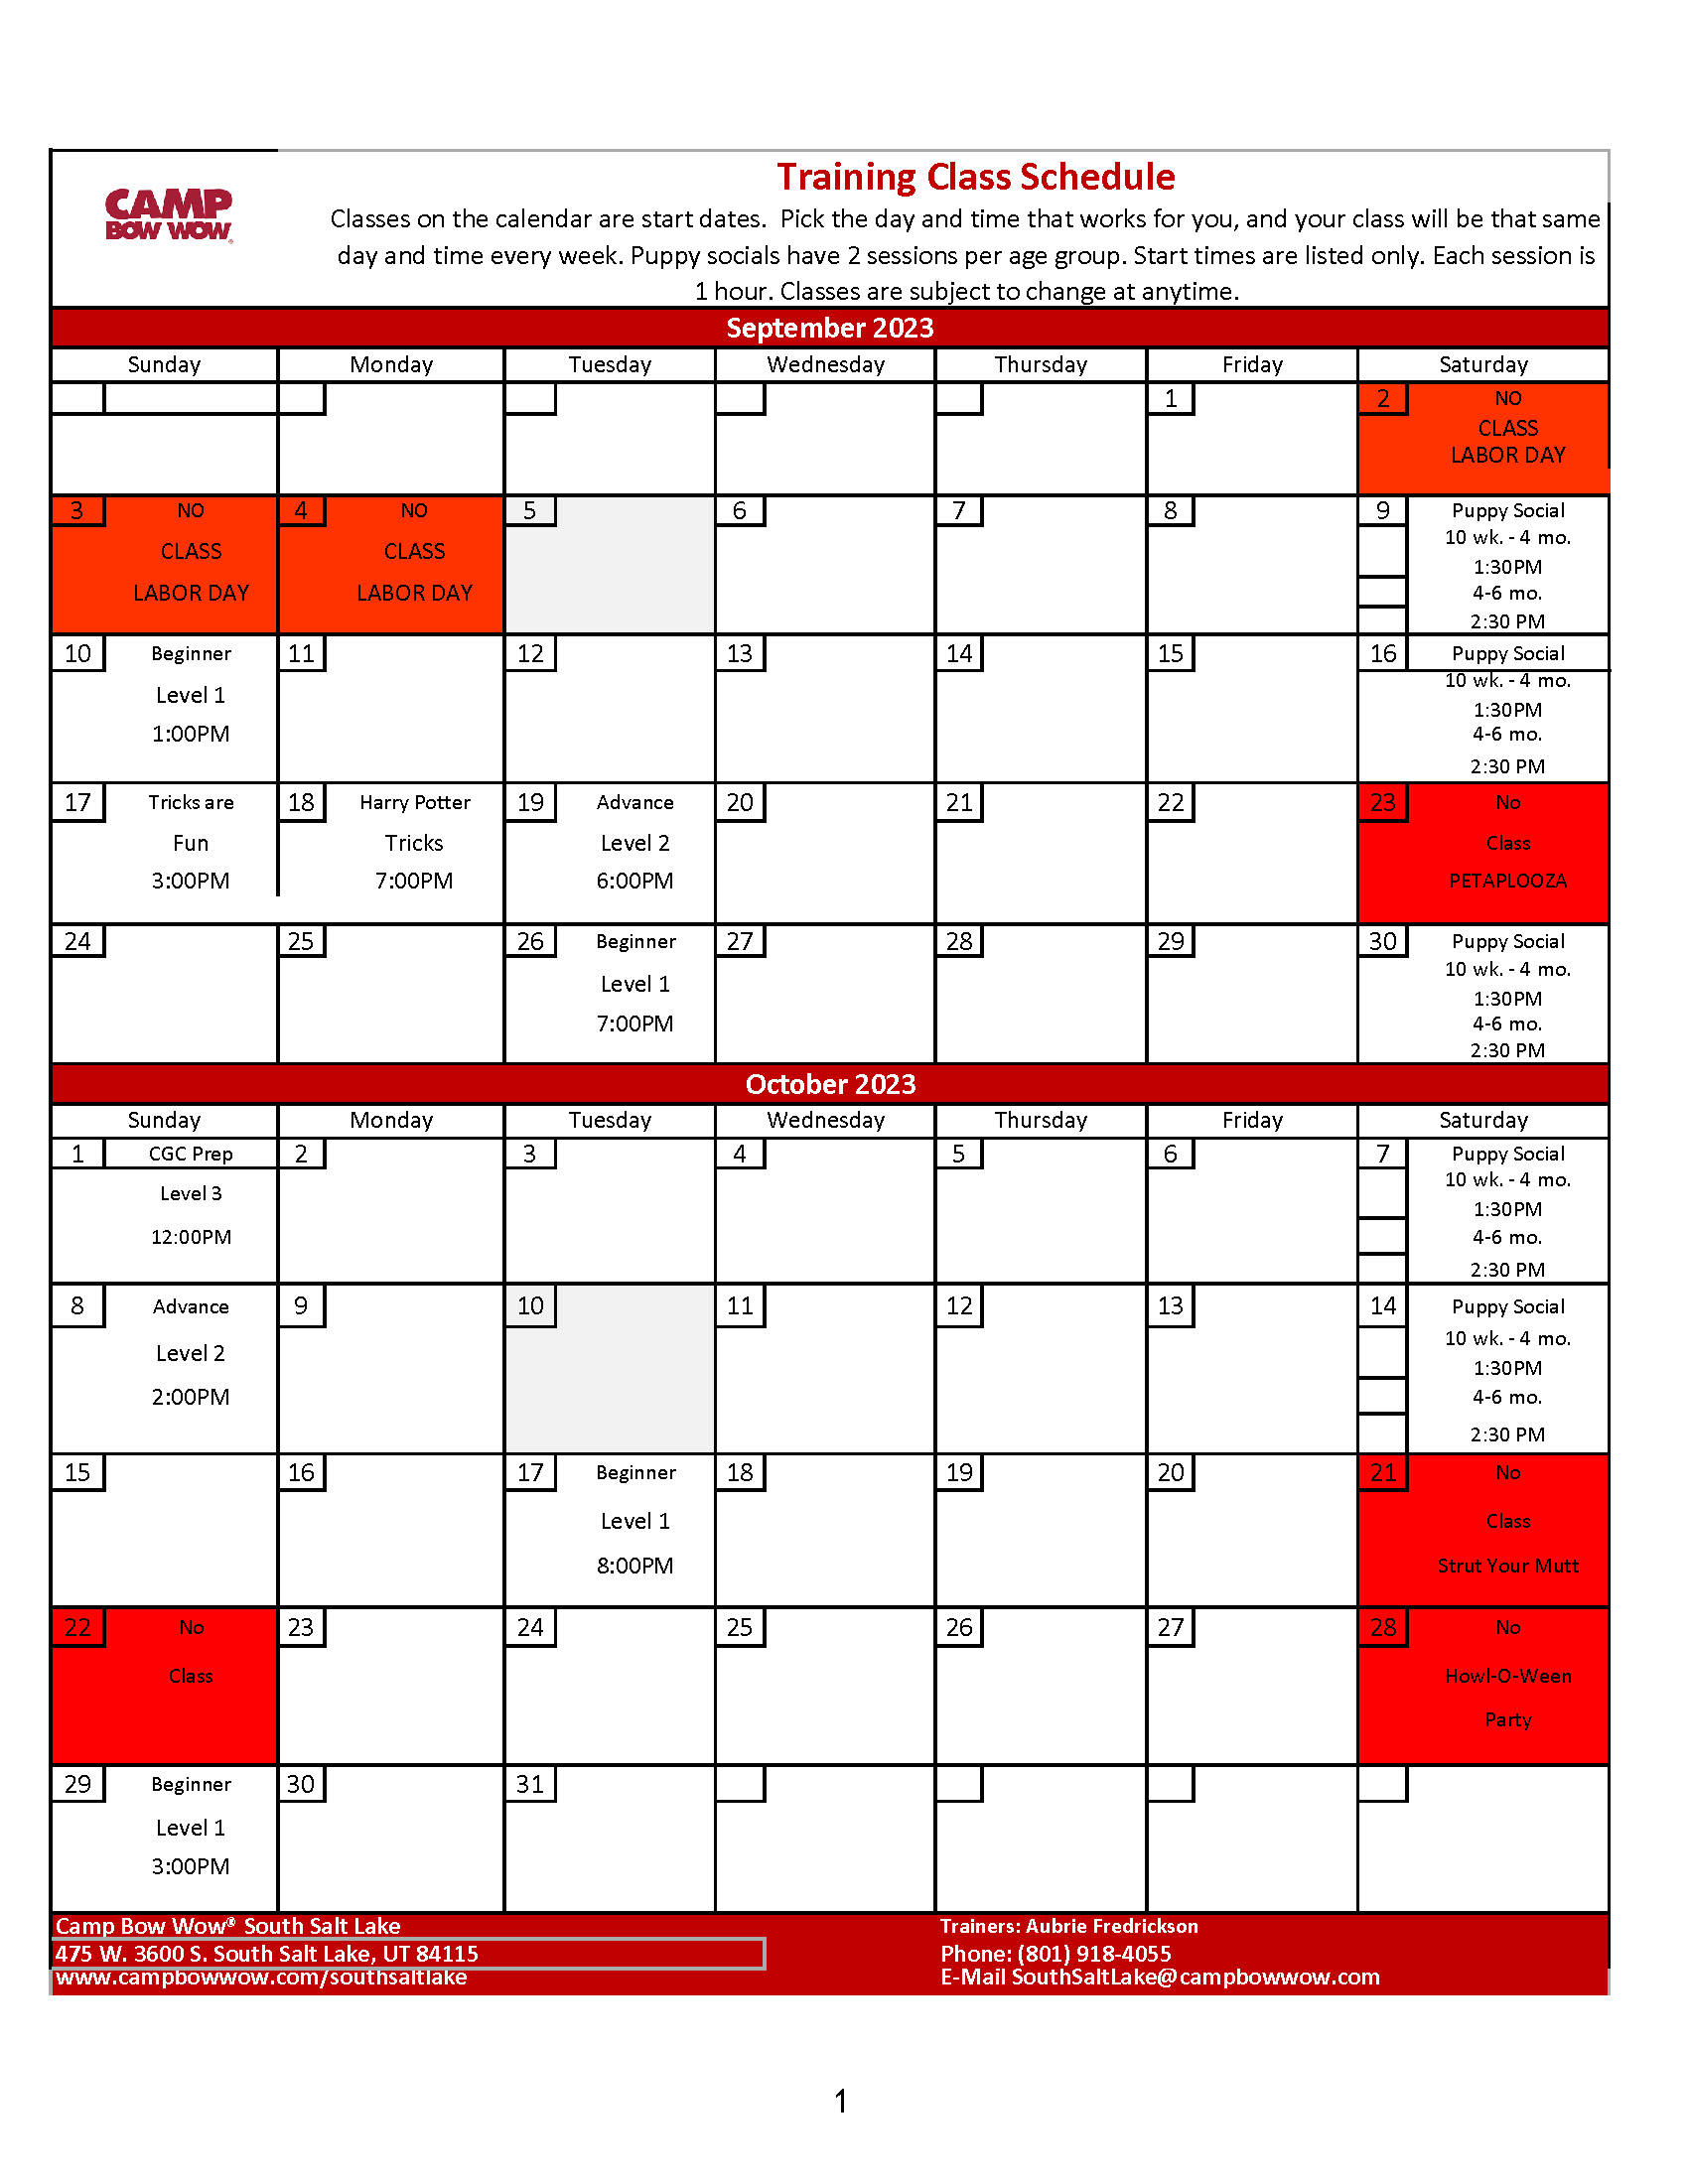 September and October Training Calendars